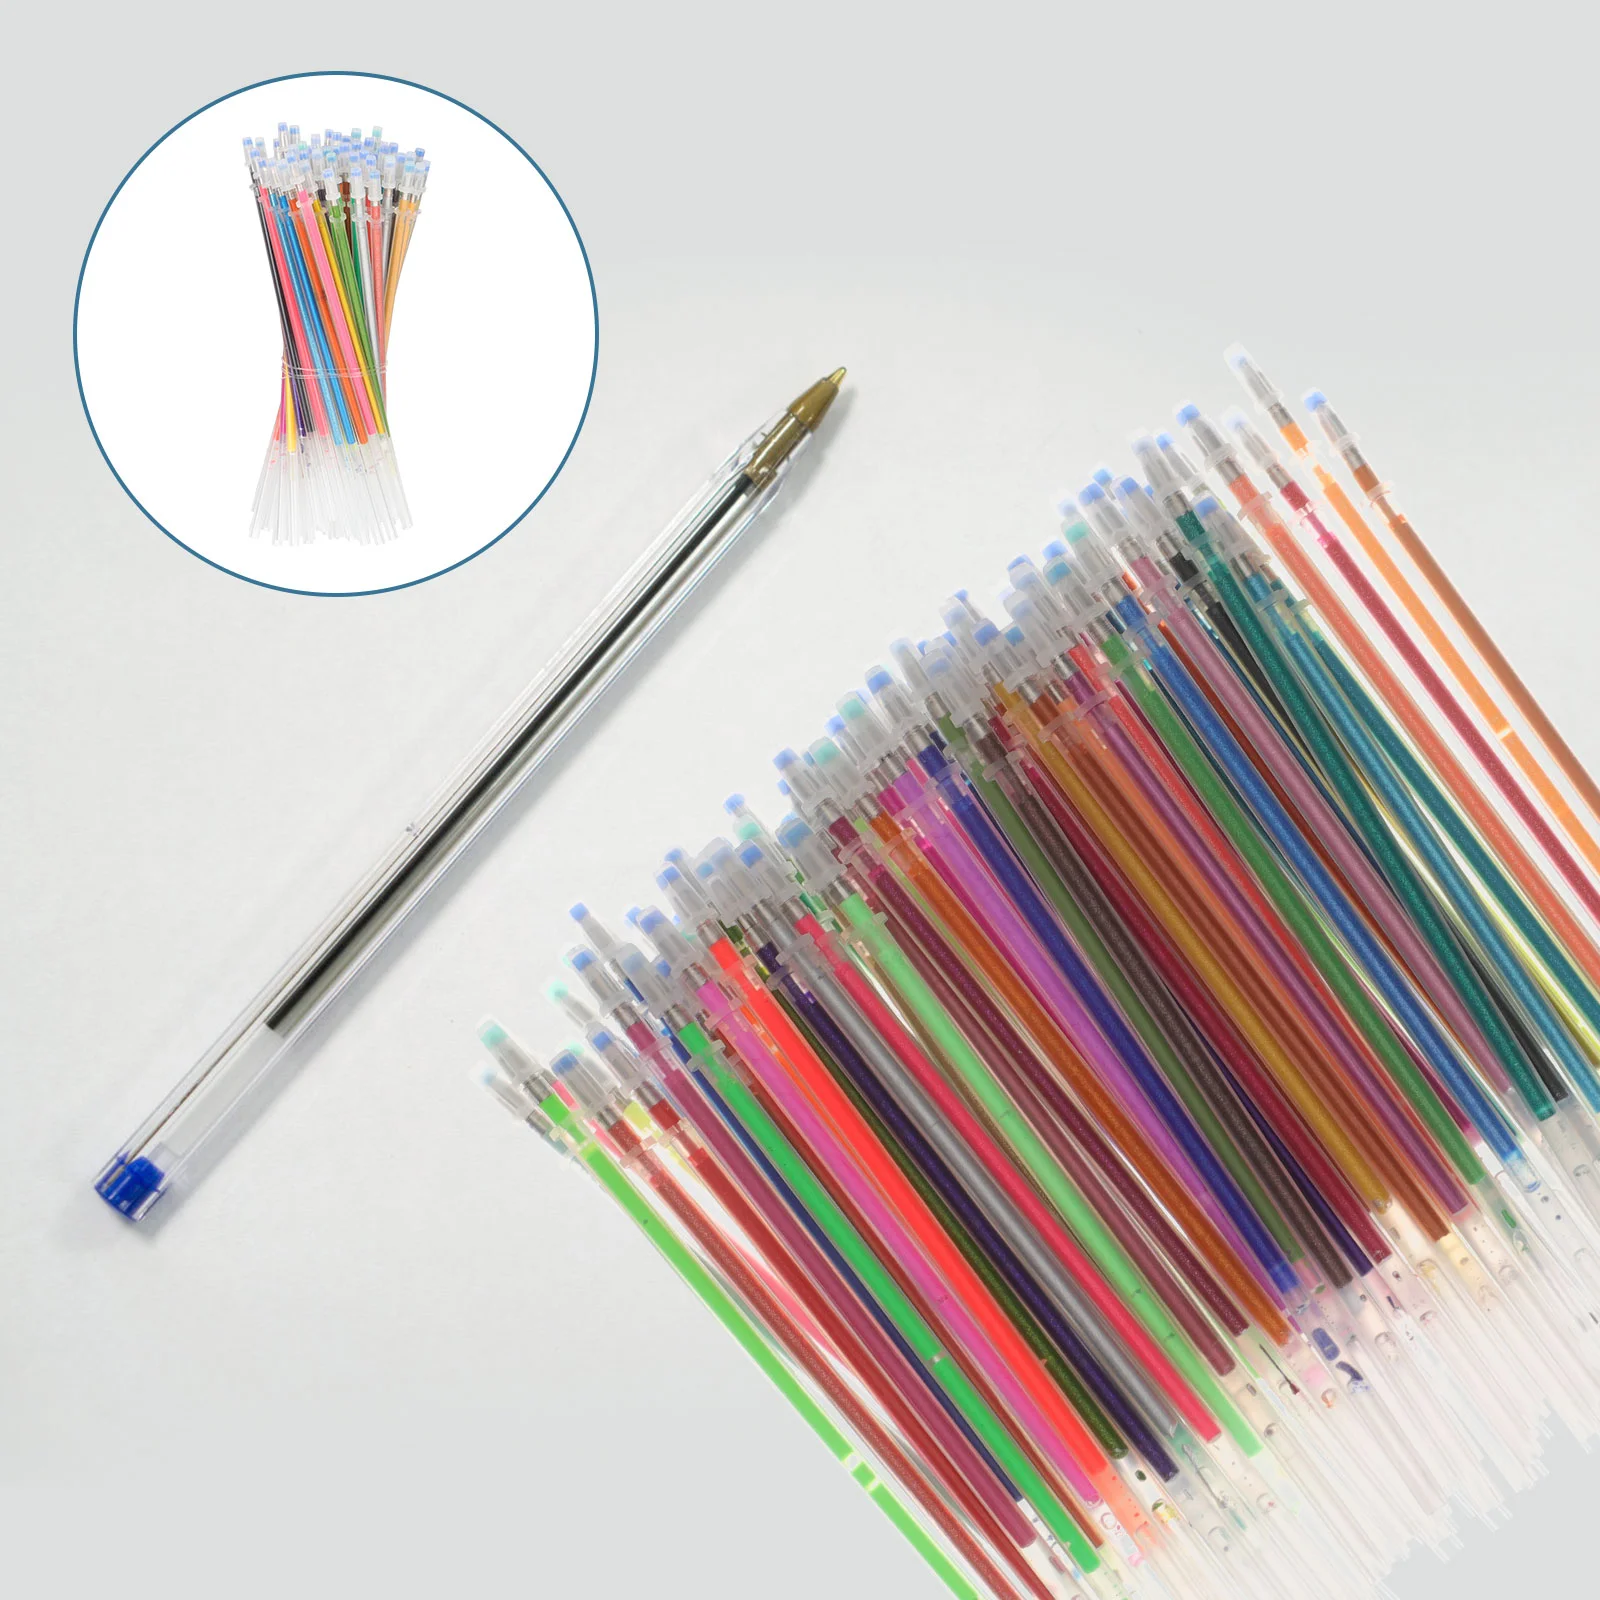 

84 Pcs Gel Refill Set Metal Decor Drawing Doodling Pen Refills Creative Office Plastic Colored Student Pens Fine Point